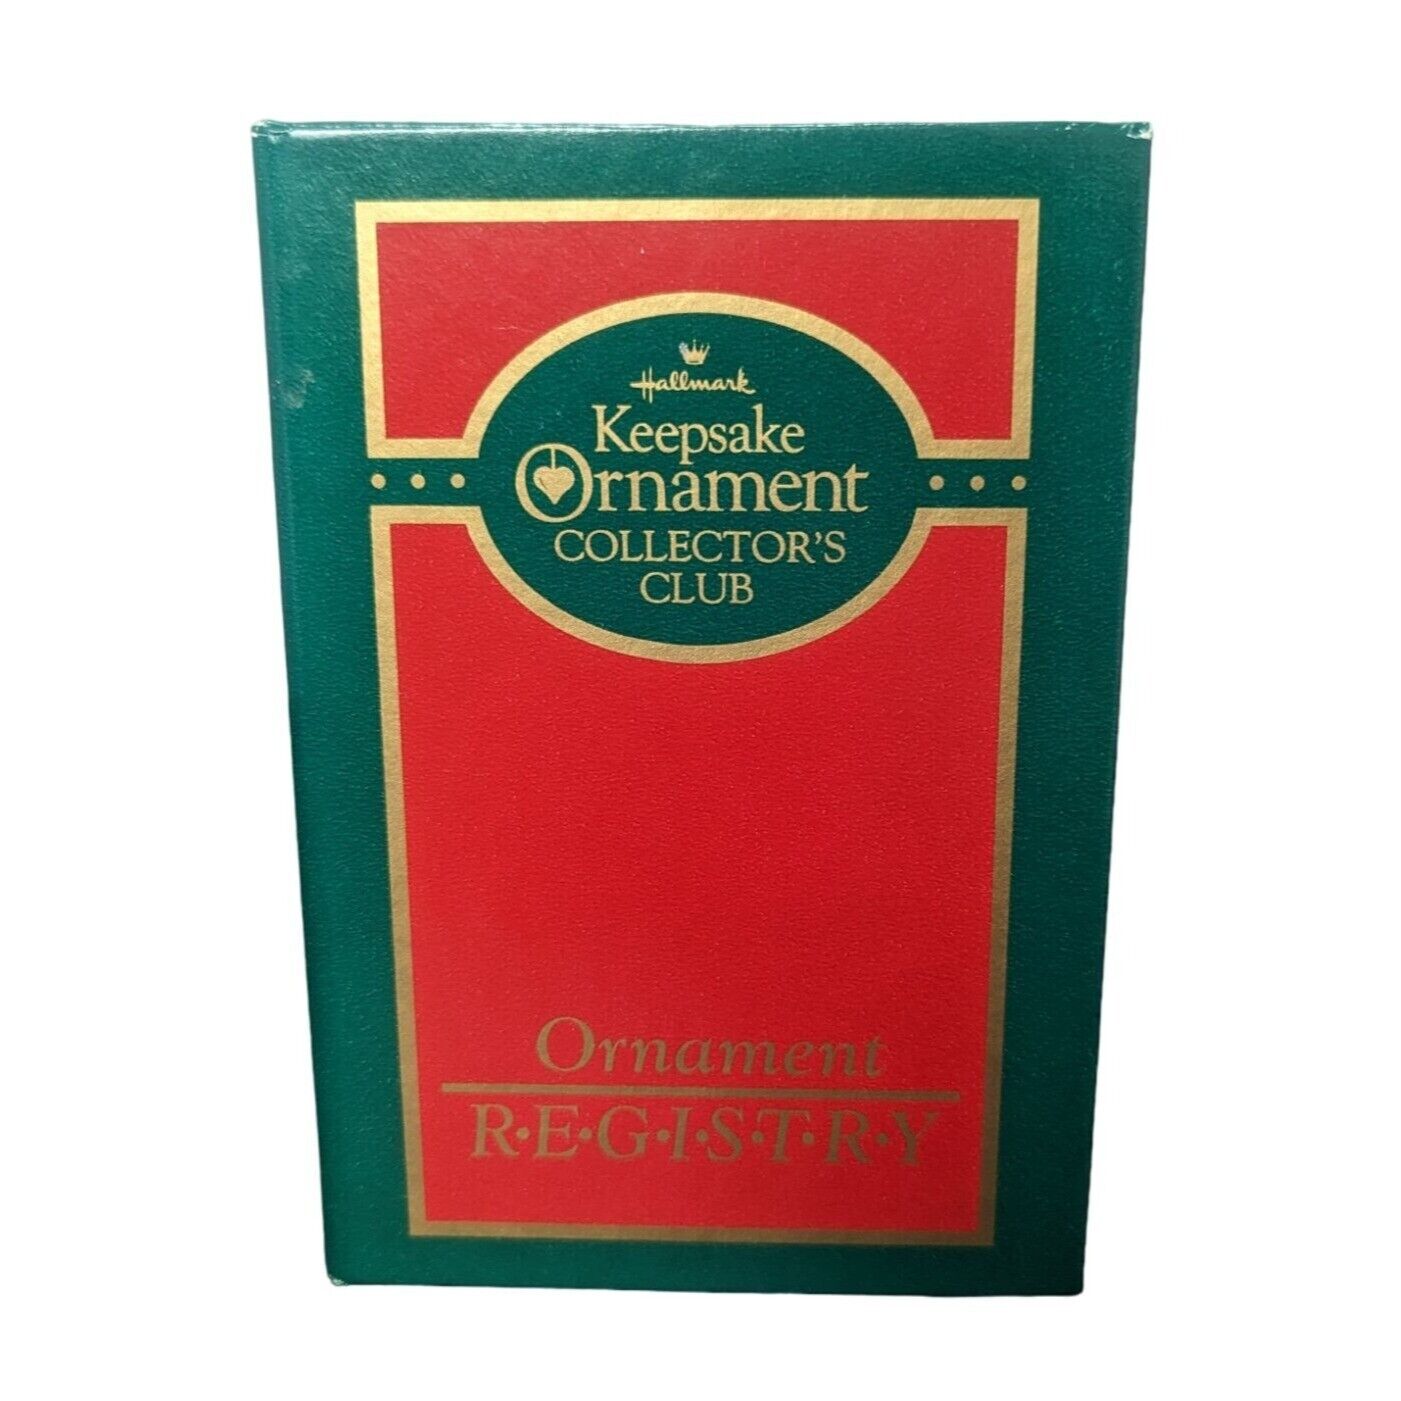 1987 Hallmark Keepsake Ornament Collector's Club Registry Book Hardcover Spiral